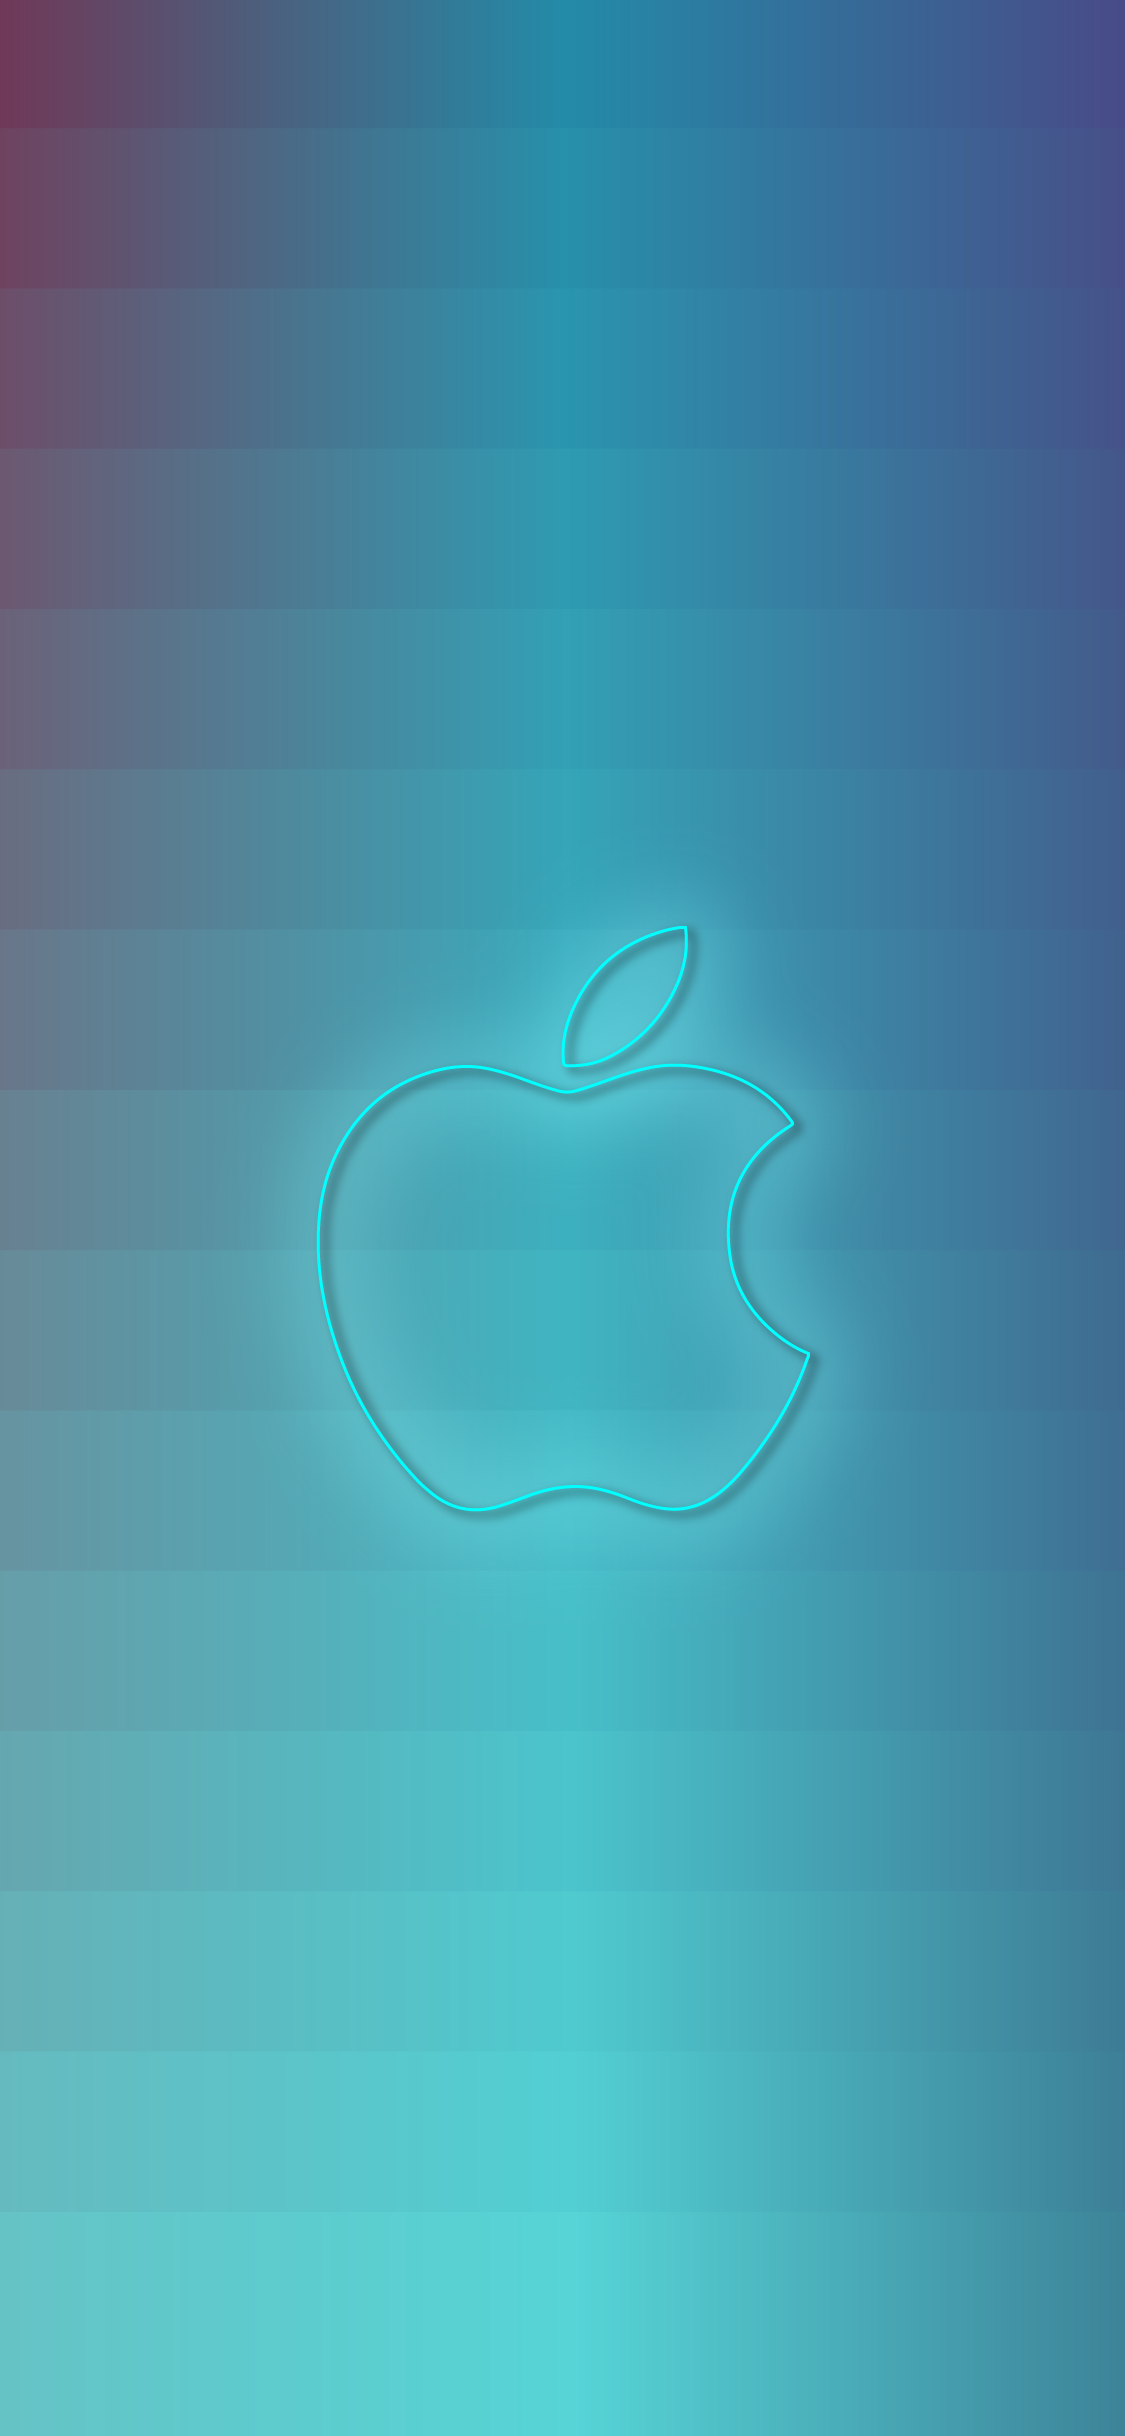 Neon apple logo wallpaper HD for iphone. Wallpaperize. Apple logo wallpaper, Logo wallpaper hd, Apple wallpaper iphone